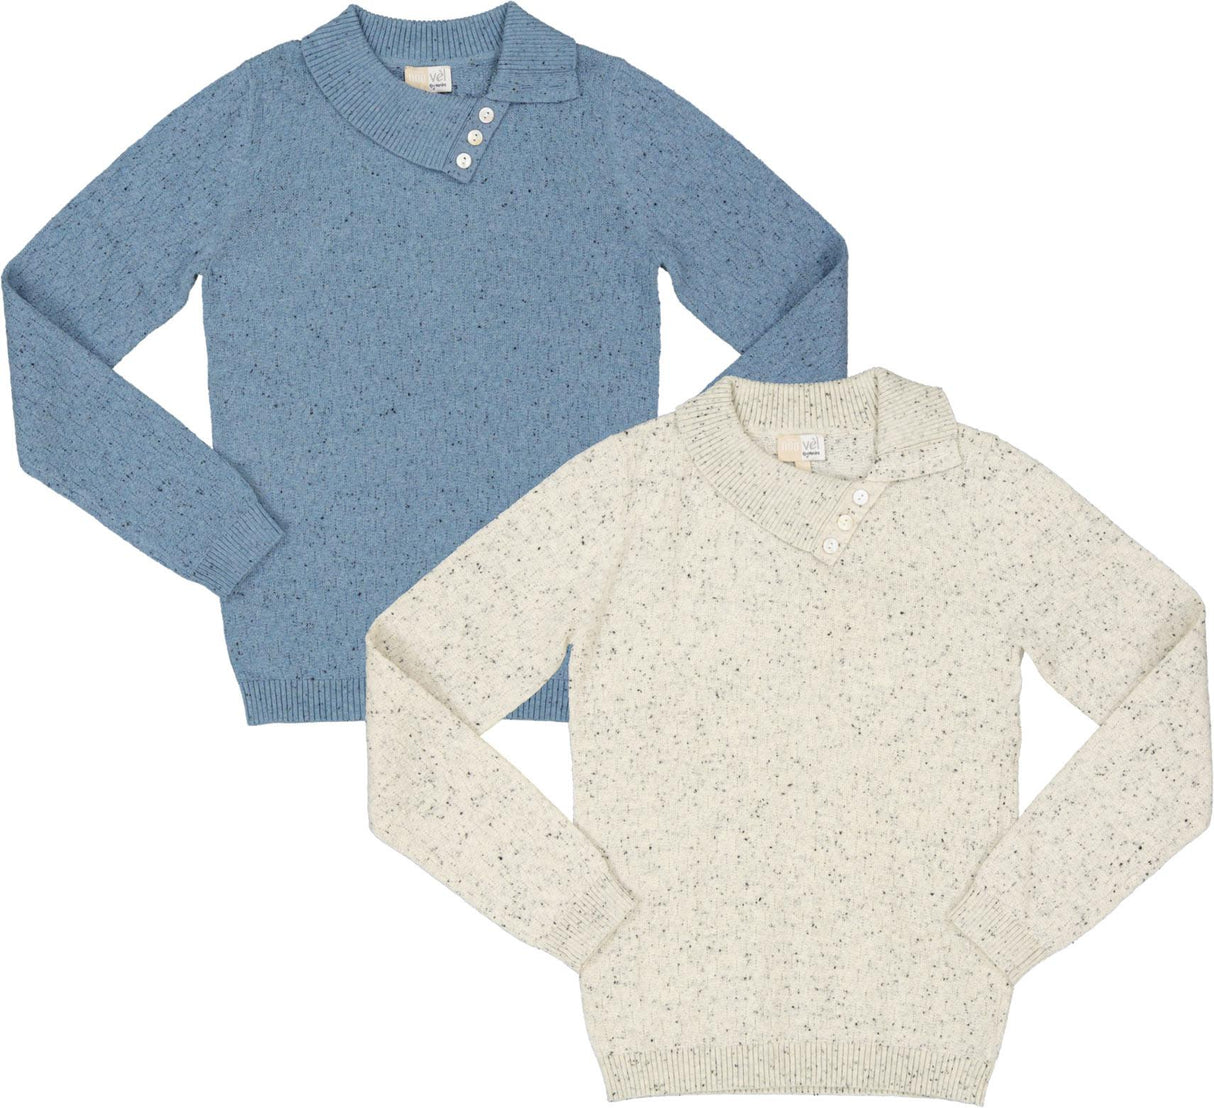 Noovel Boys Speckled Sweater - FDTN23